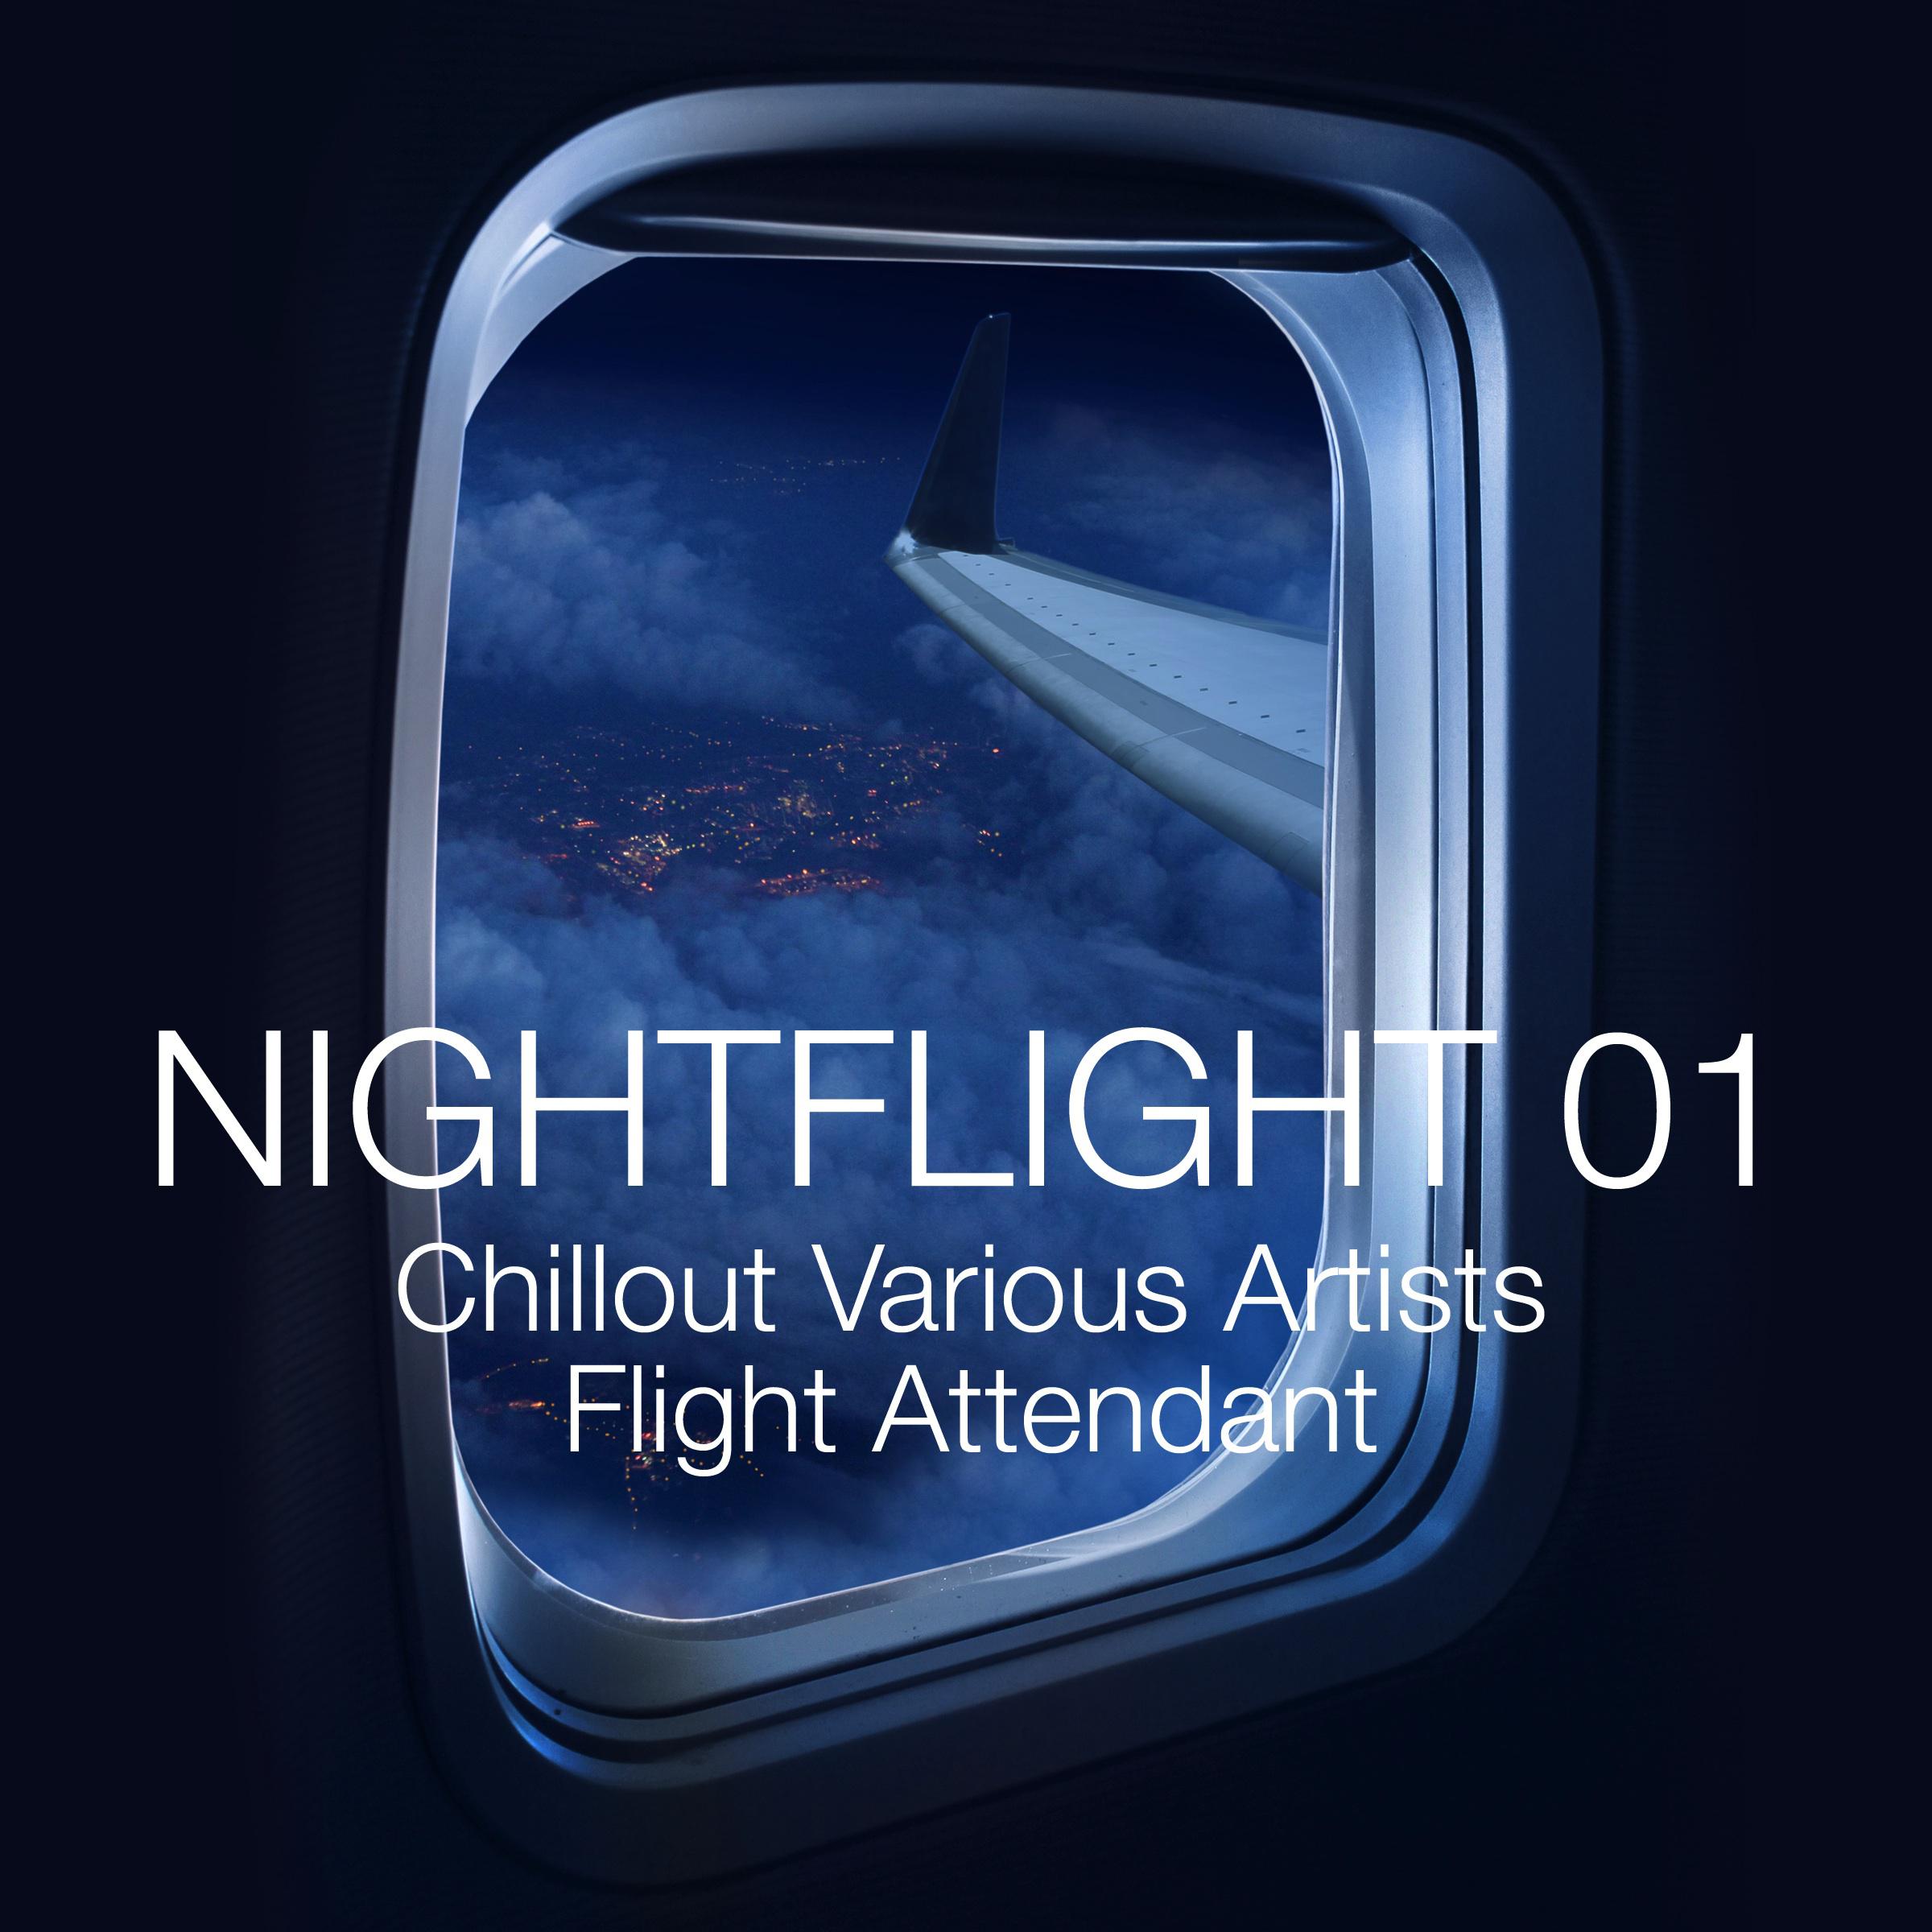 Nightflight 01 - Chillout Various Artists Flight Attendant